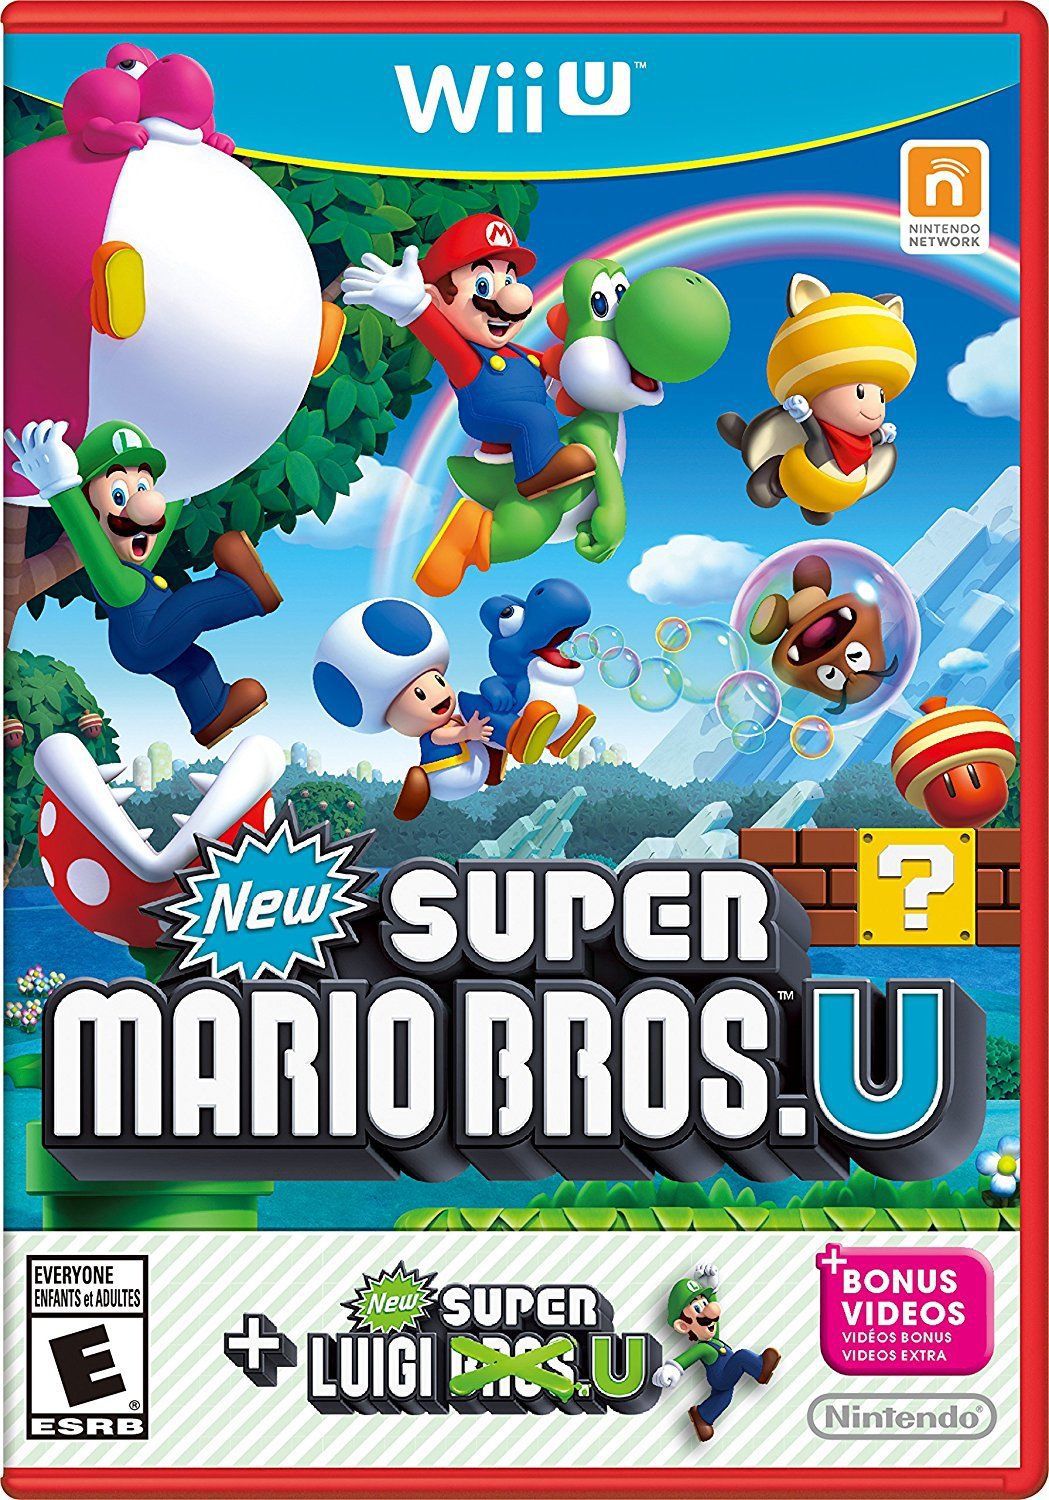 New Super Mario Bros. 2 - 3DS - Game Games - Loja de Games Online